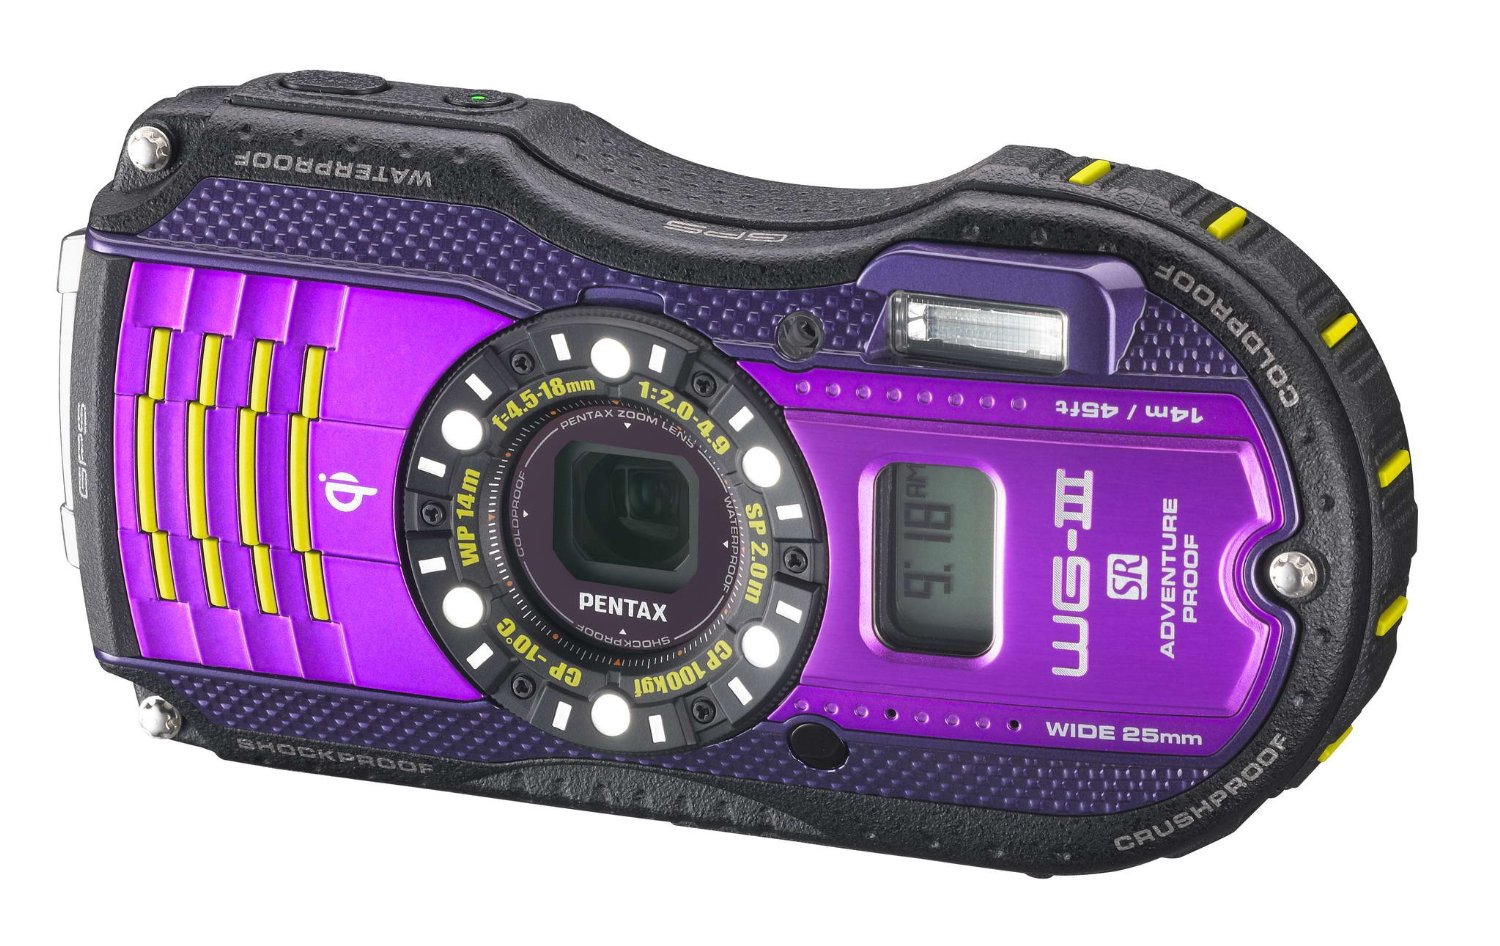 waterproof digital camera, digital camera, waterproof camera